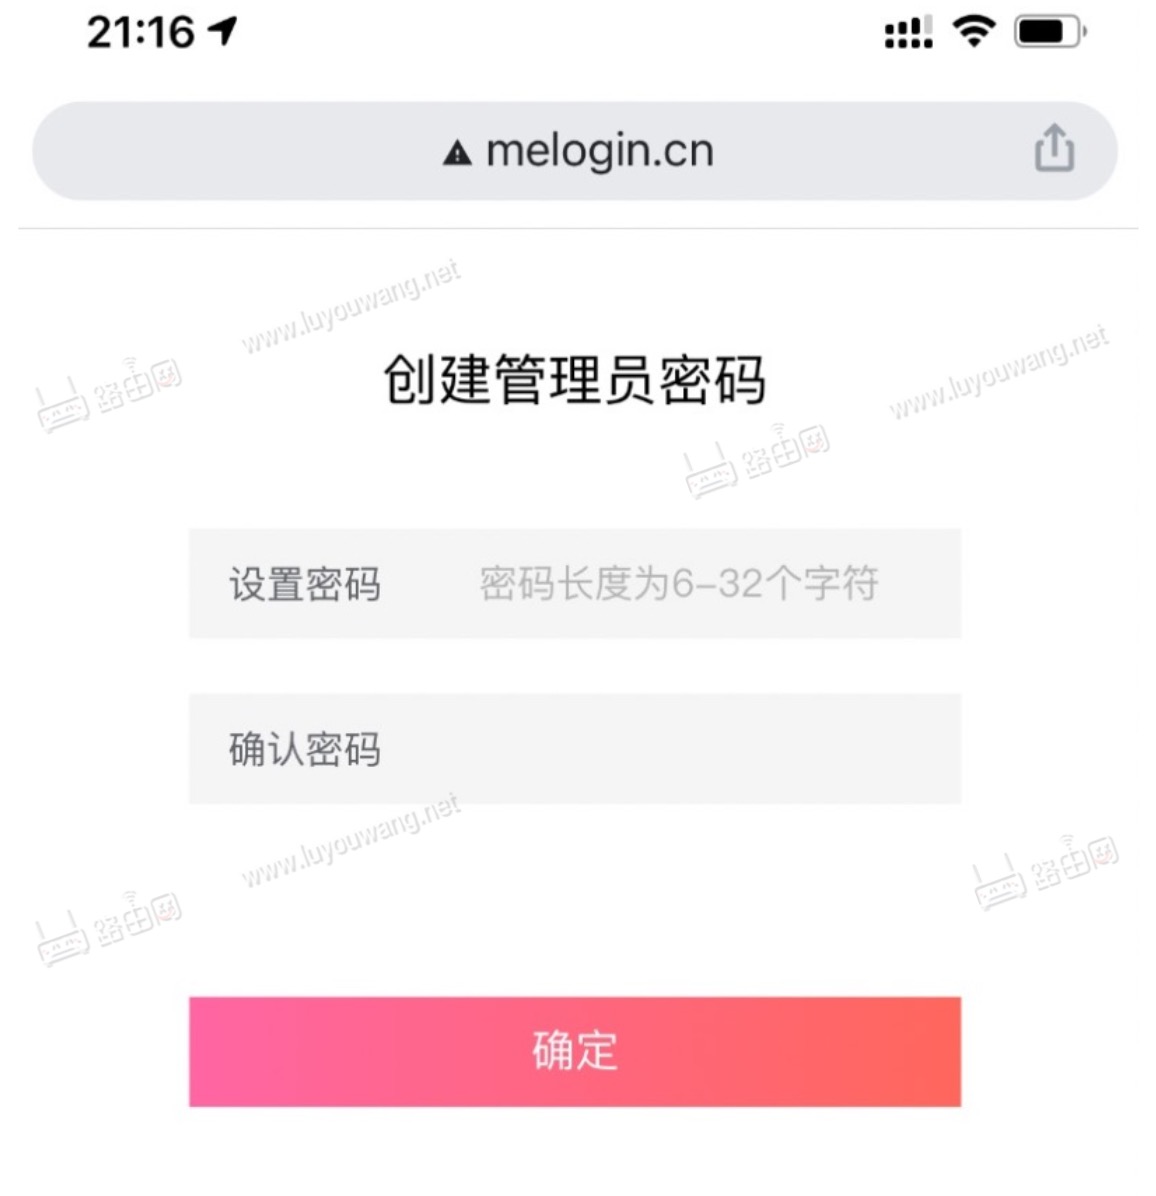 melogin.cn登录管理页面密码是多少？